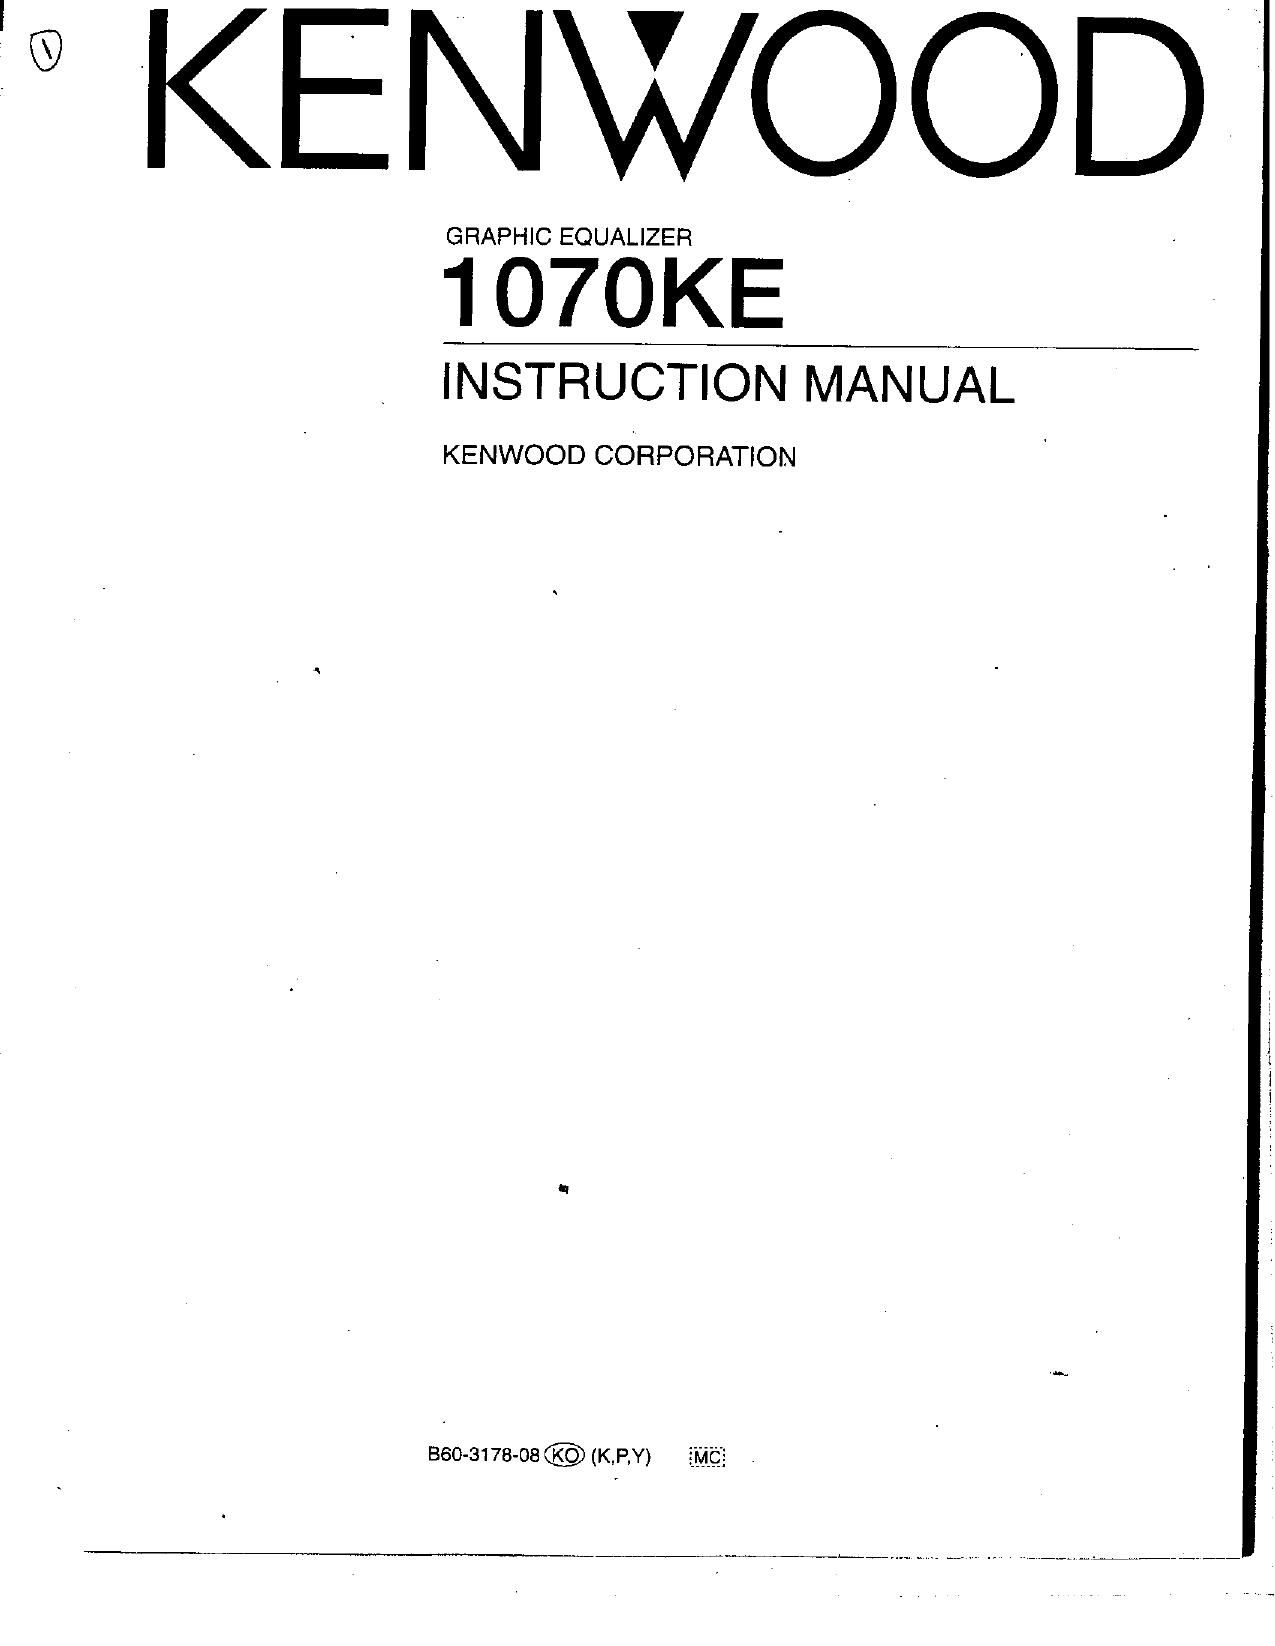 Kenwood 1070 KE Owners Manual